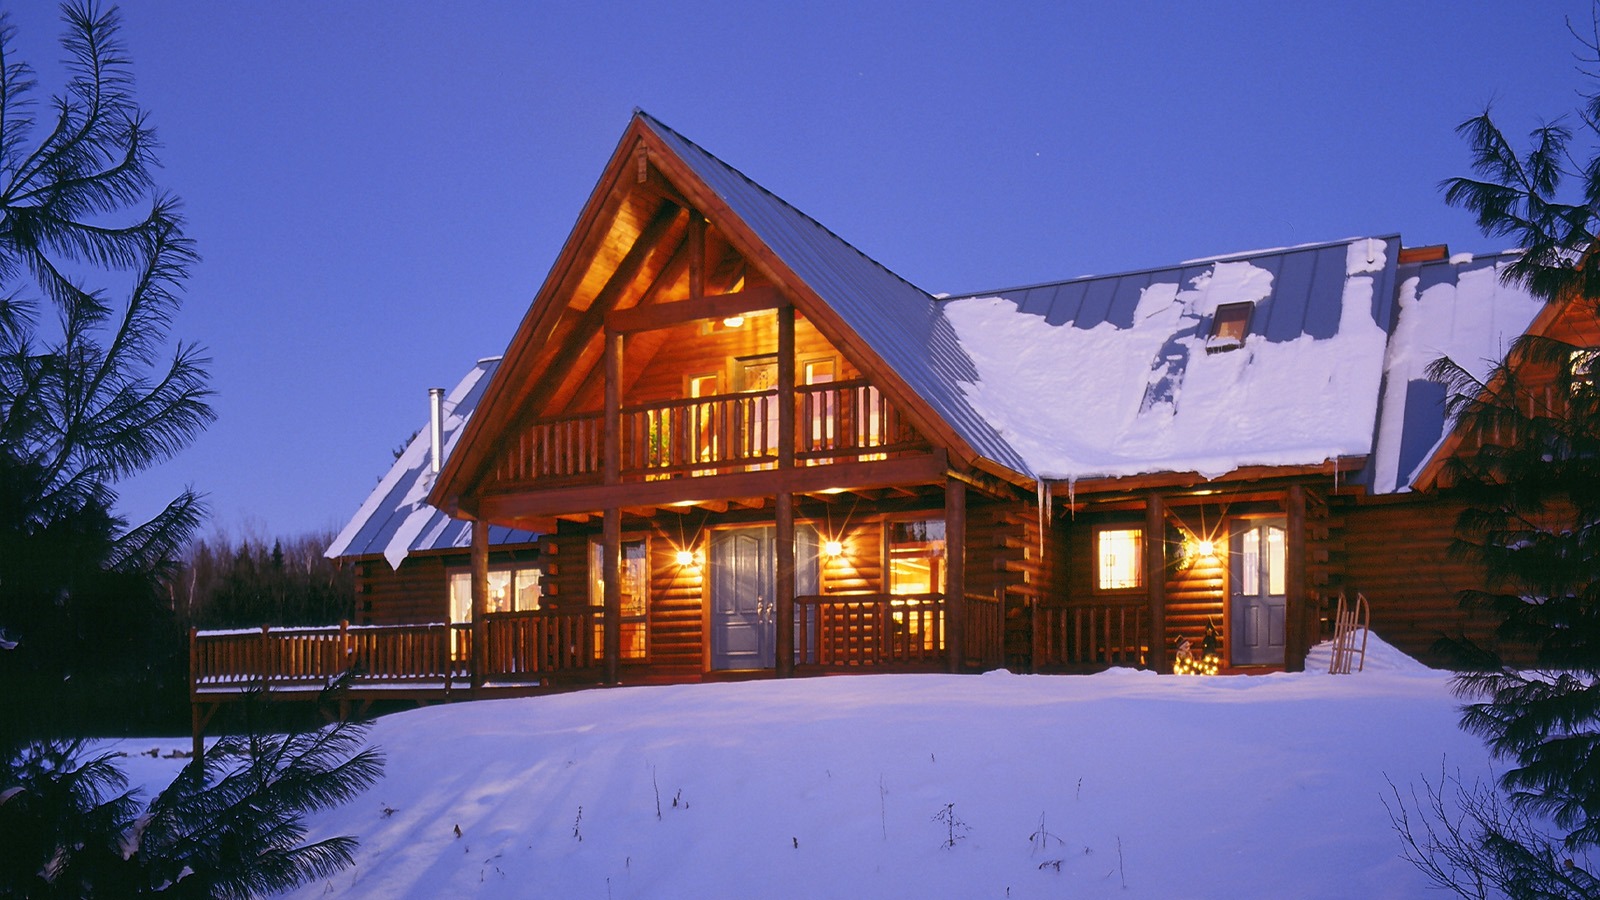 The Littleton: A Wonderful Real Log Ski Home